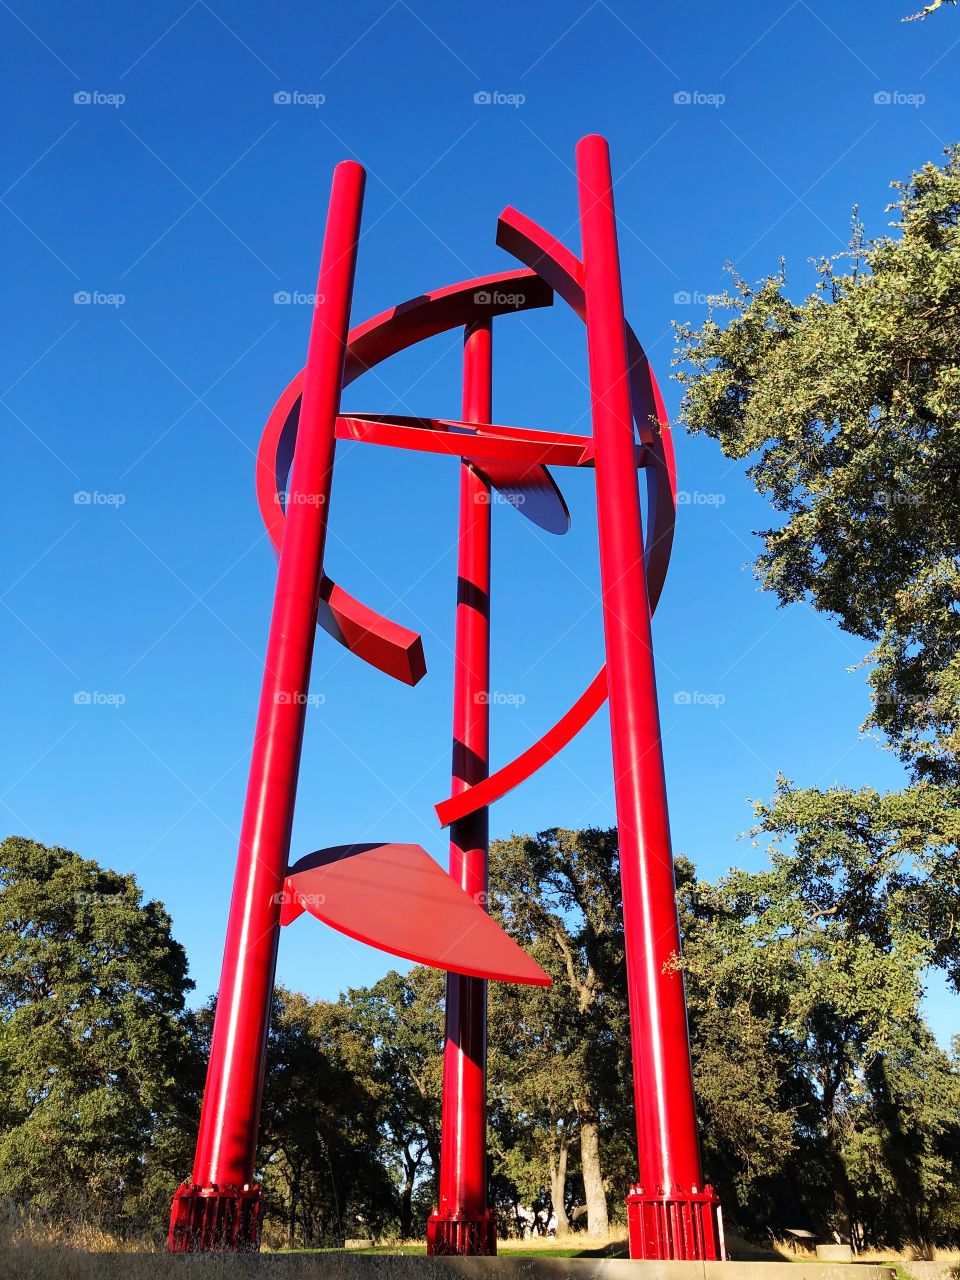 Riaeville California Cosmos Sculpture in the Park, famous. 